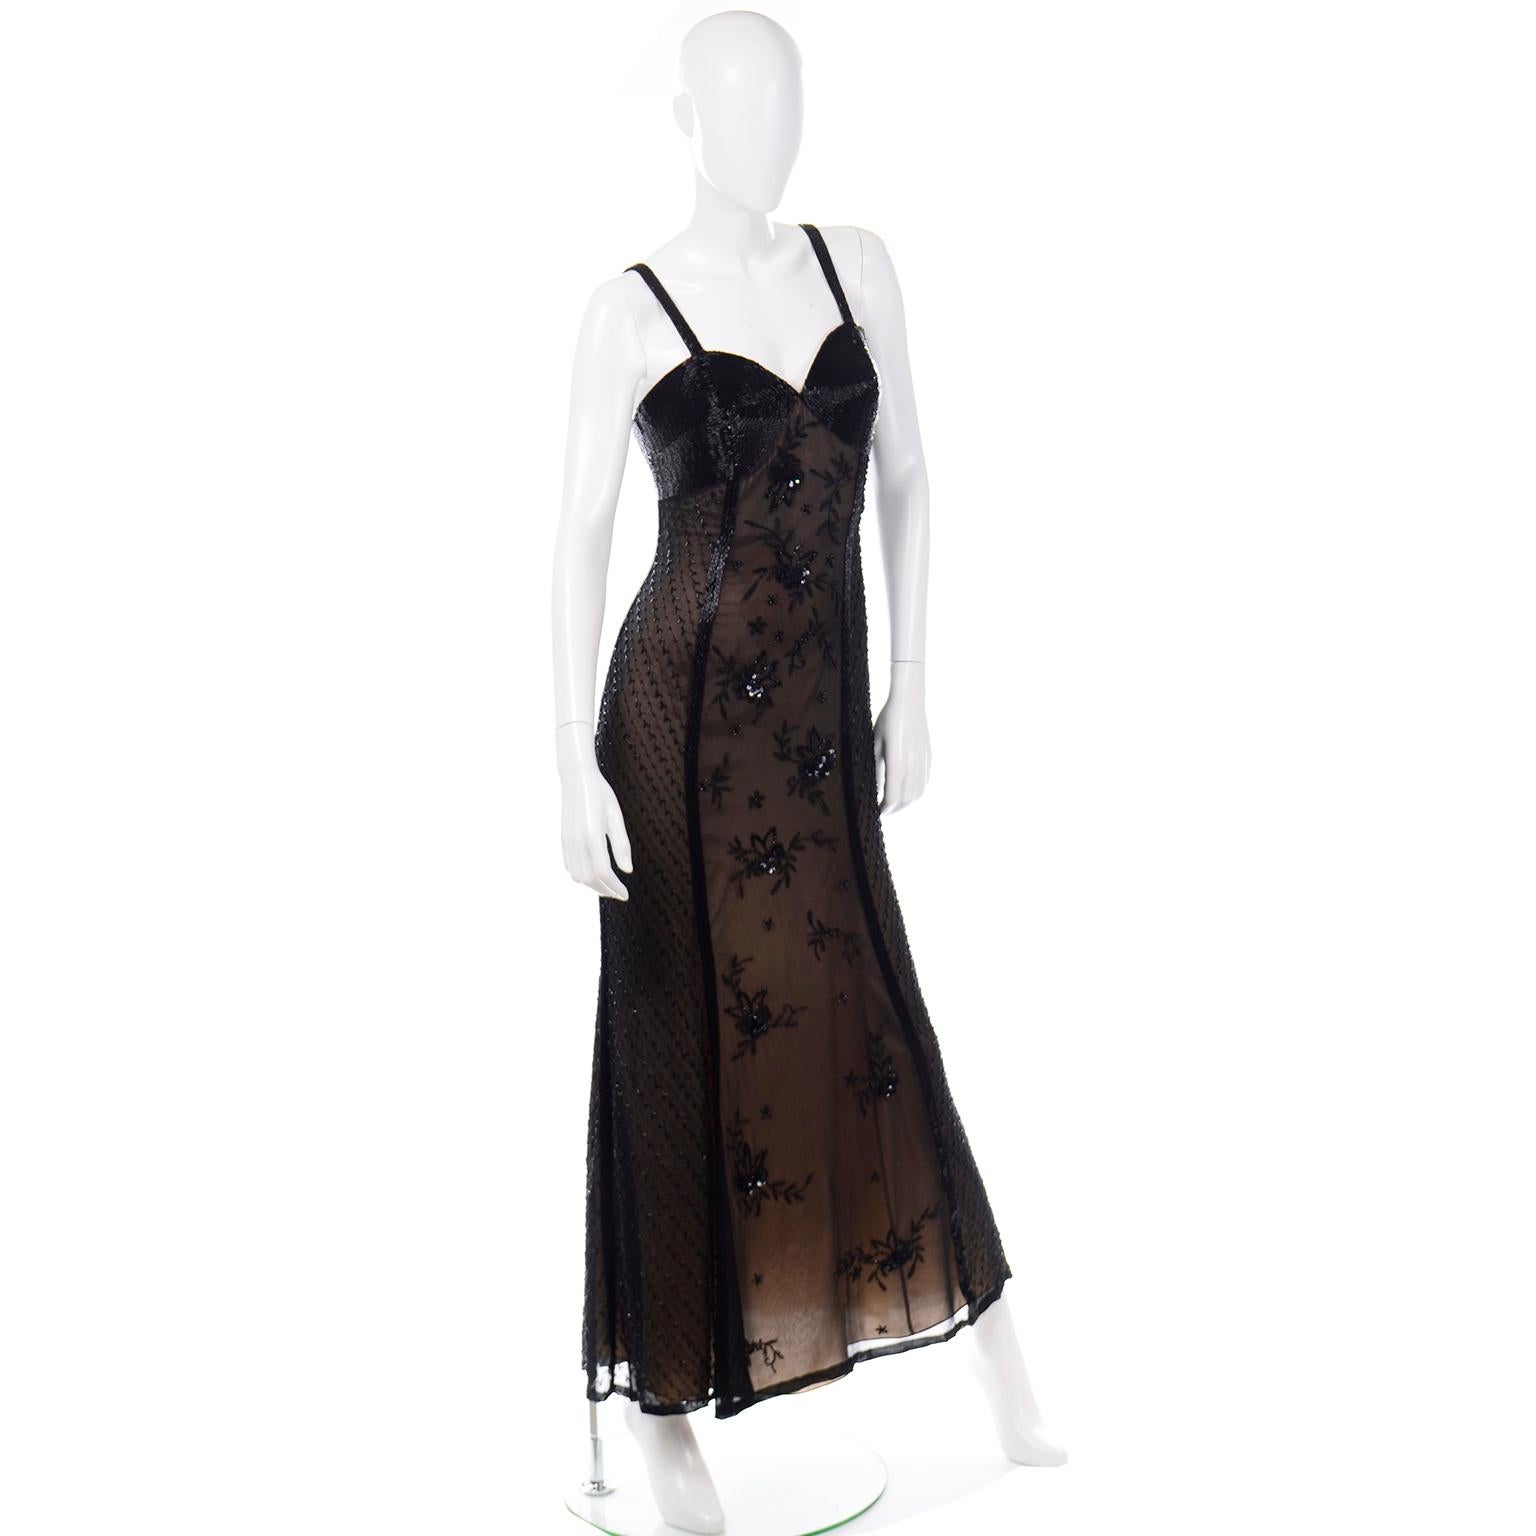 Women's Black Beaded Sheer Evening Dress over Beige Under dress w Heavily Beaded Bodice